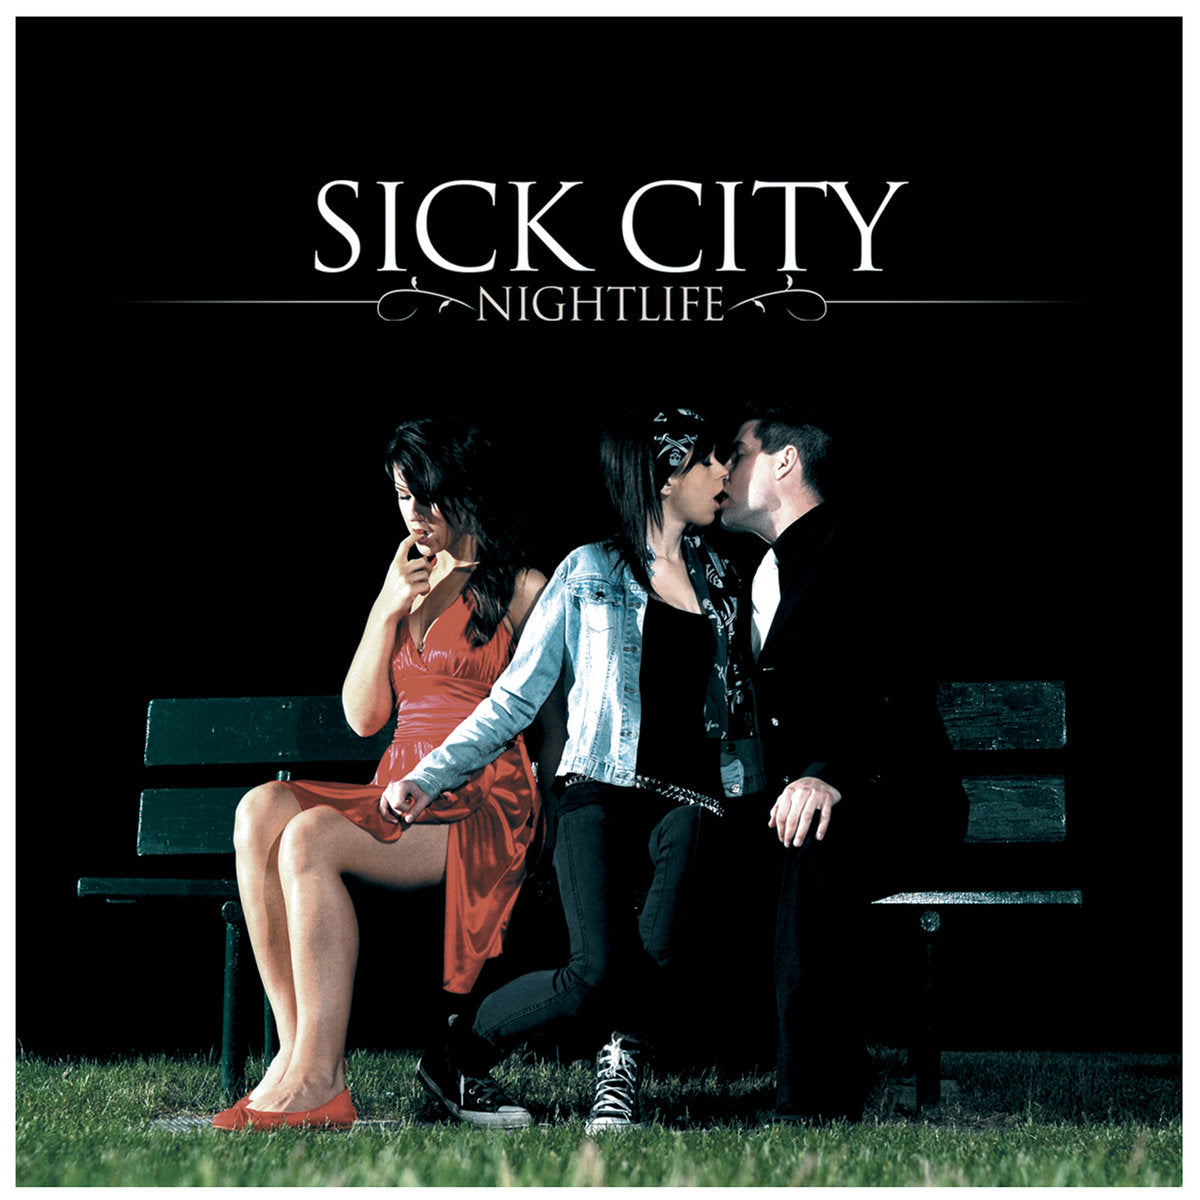 Sick City "Nightlife" CD